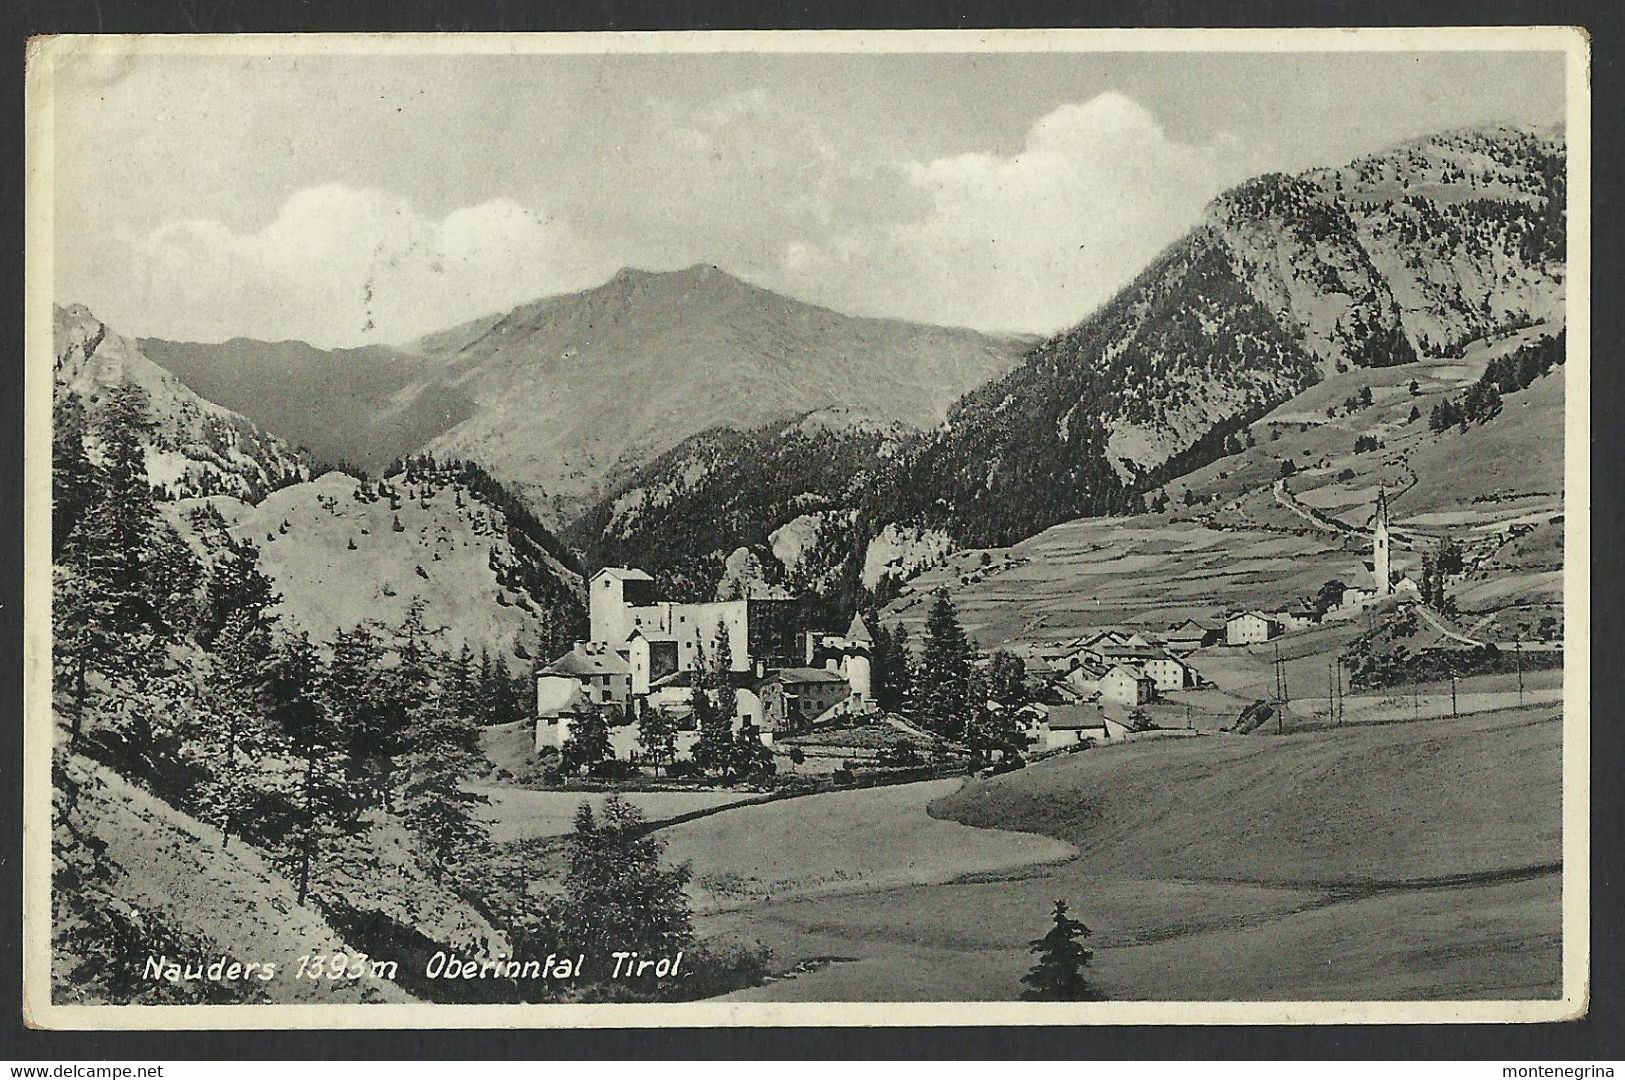 NEUDERS - Oberinfal Tirol 1936 - Verlag Schöllhorn (kunstverlag Monopol) - Old Postcard (see Sales Conditions) 05766 - Nauders